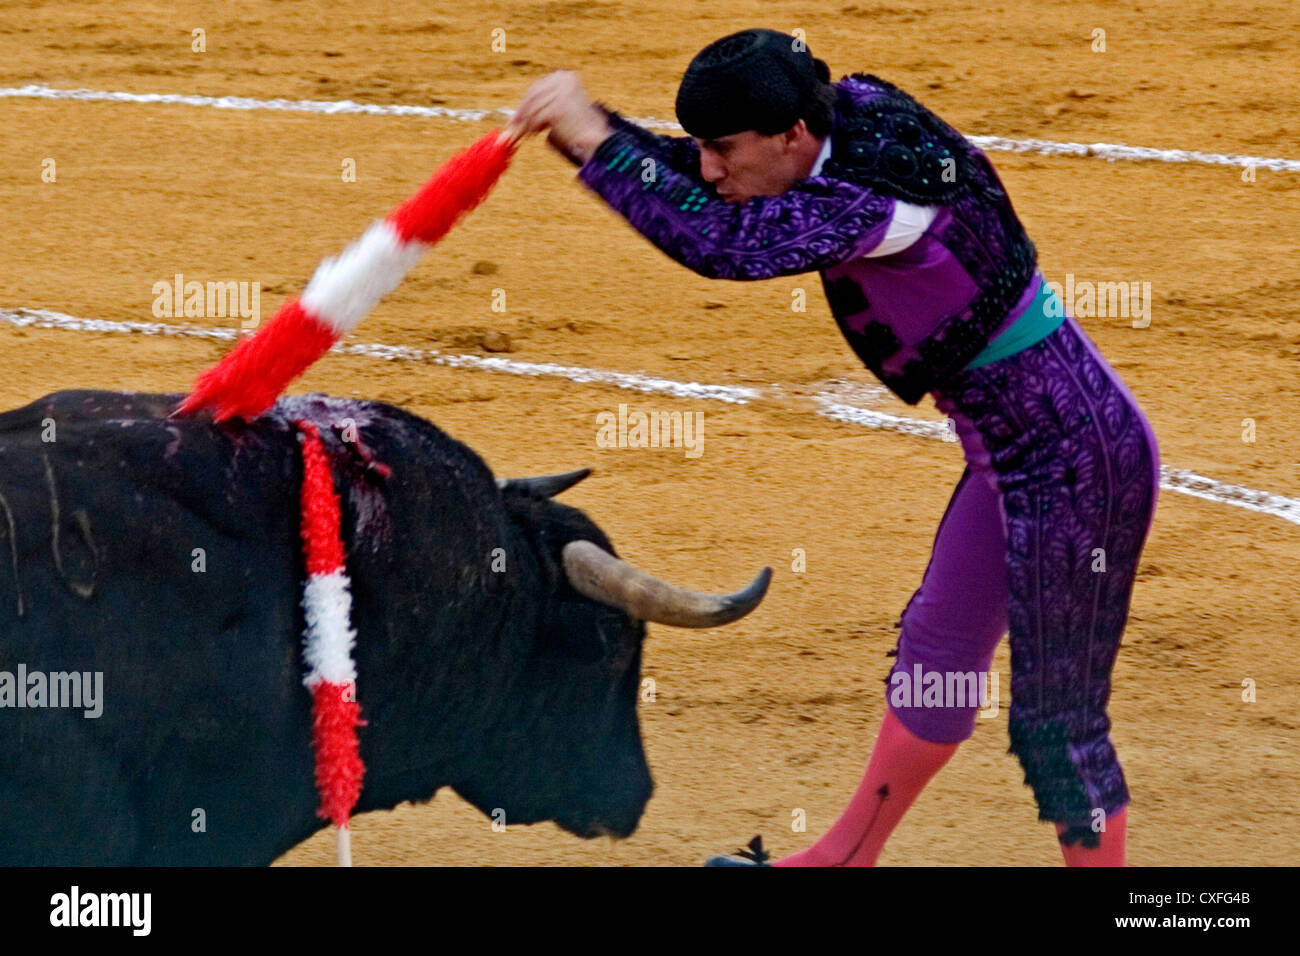 Toreros espana hi-res stock photography and images - Alamy